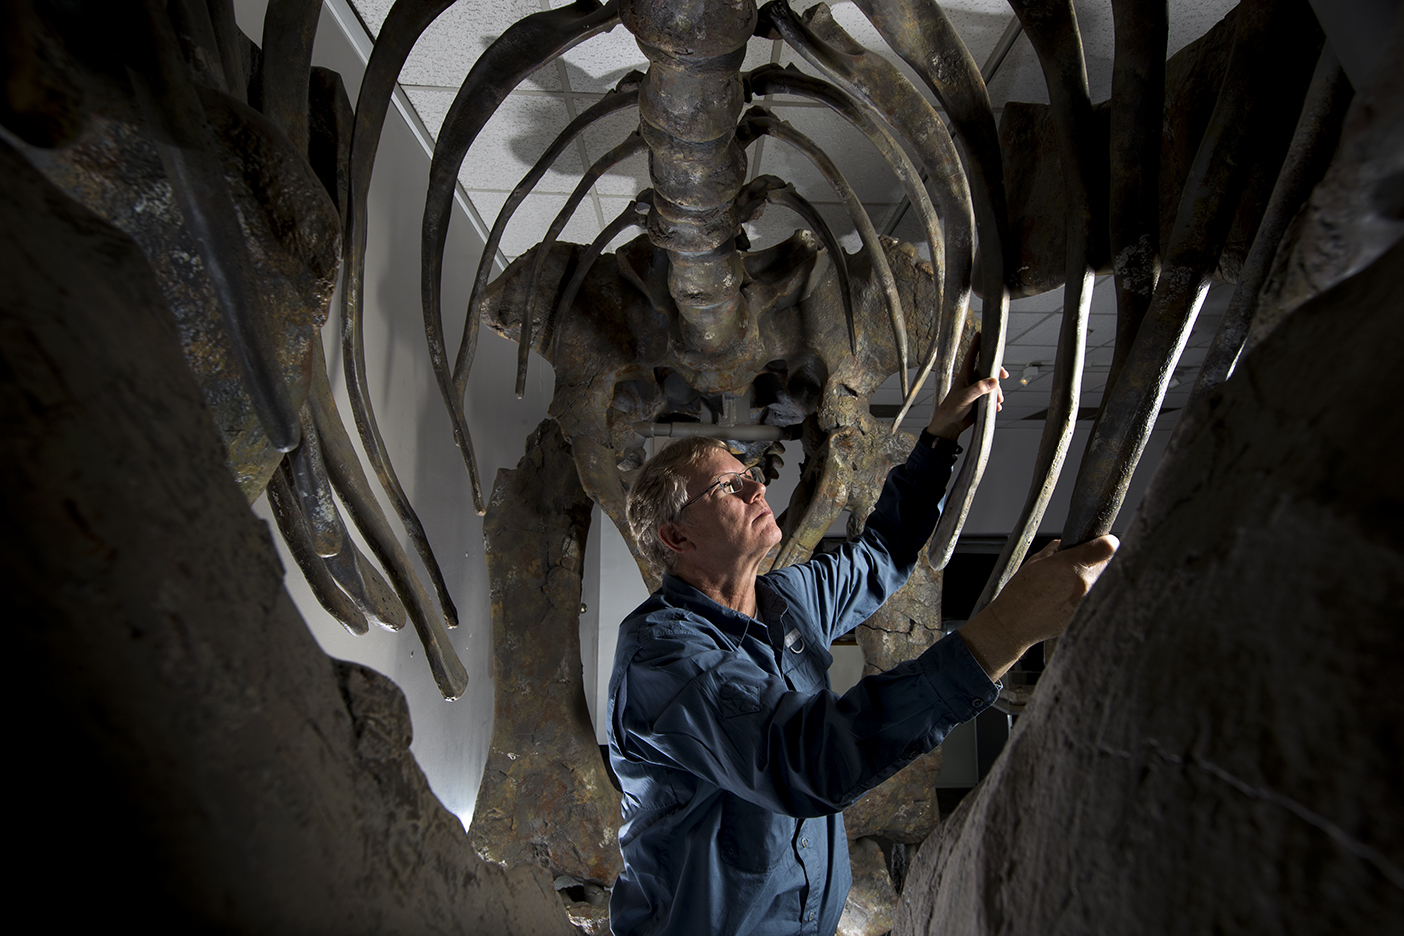 Brooks Britt examines the fully built Moabosaurus replica from inside its ribcage.